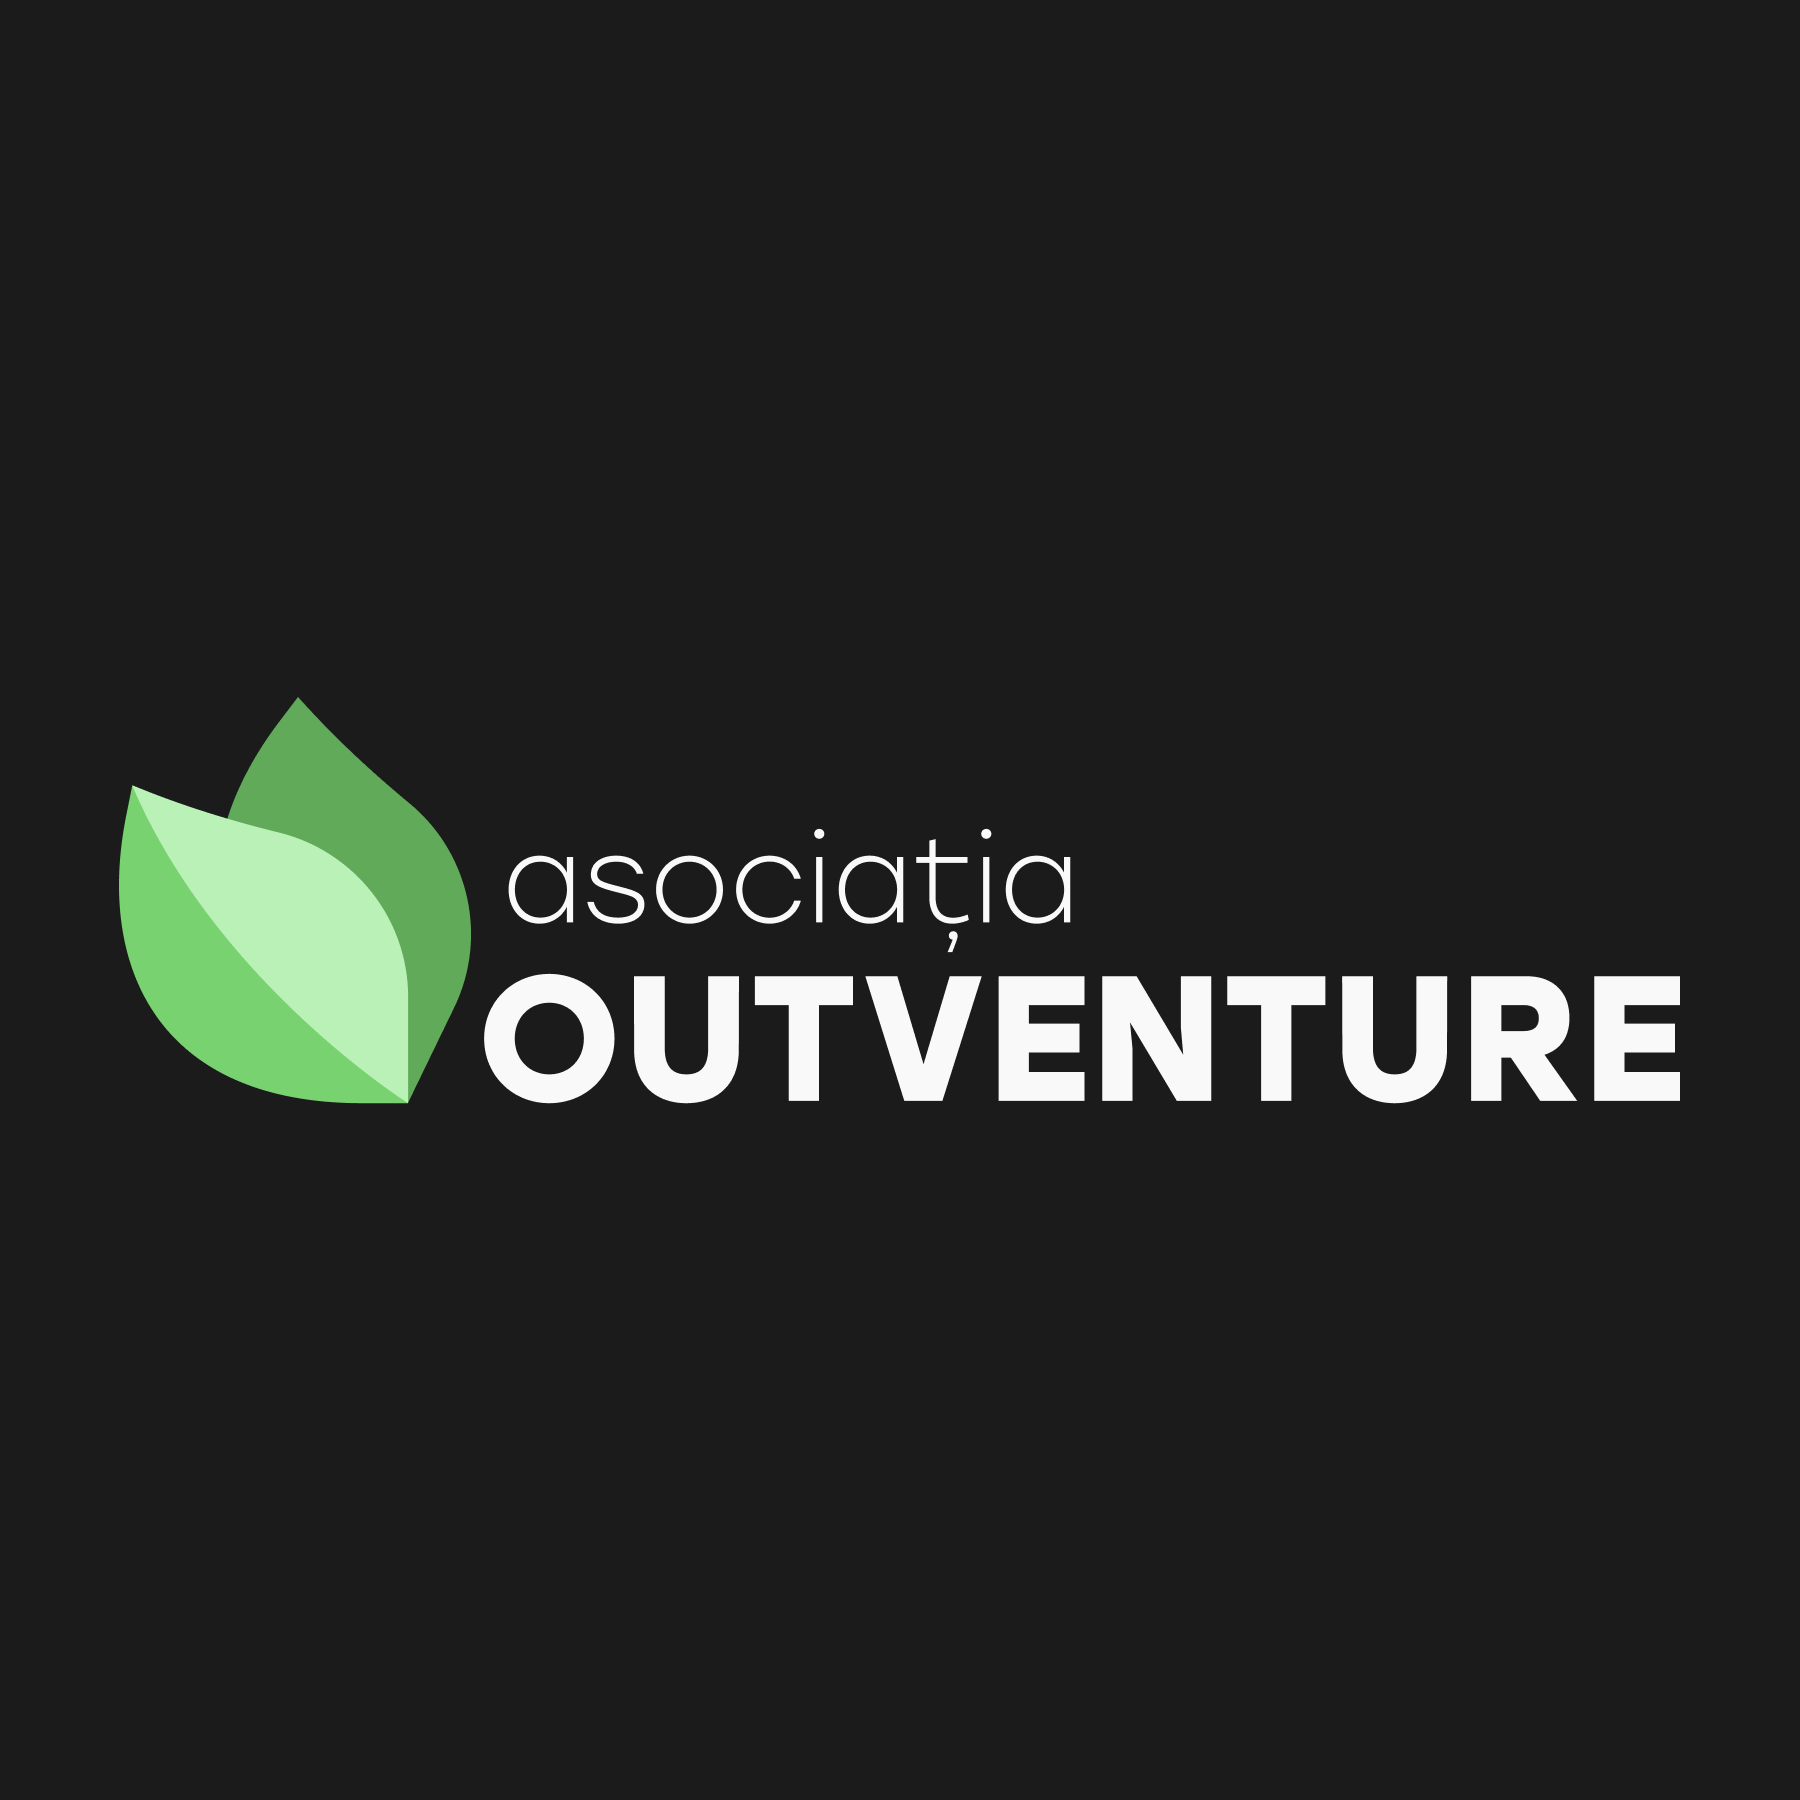 Asociatia Outventure logo